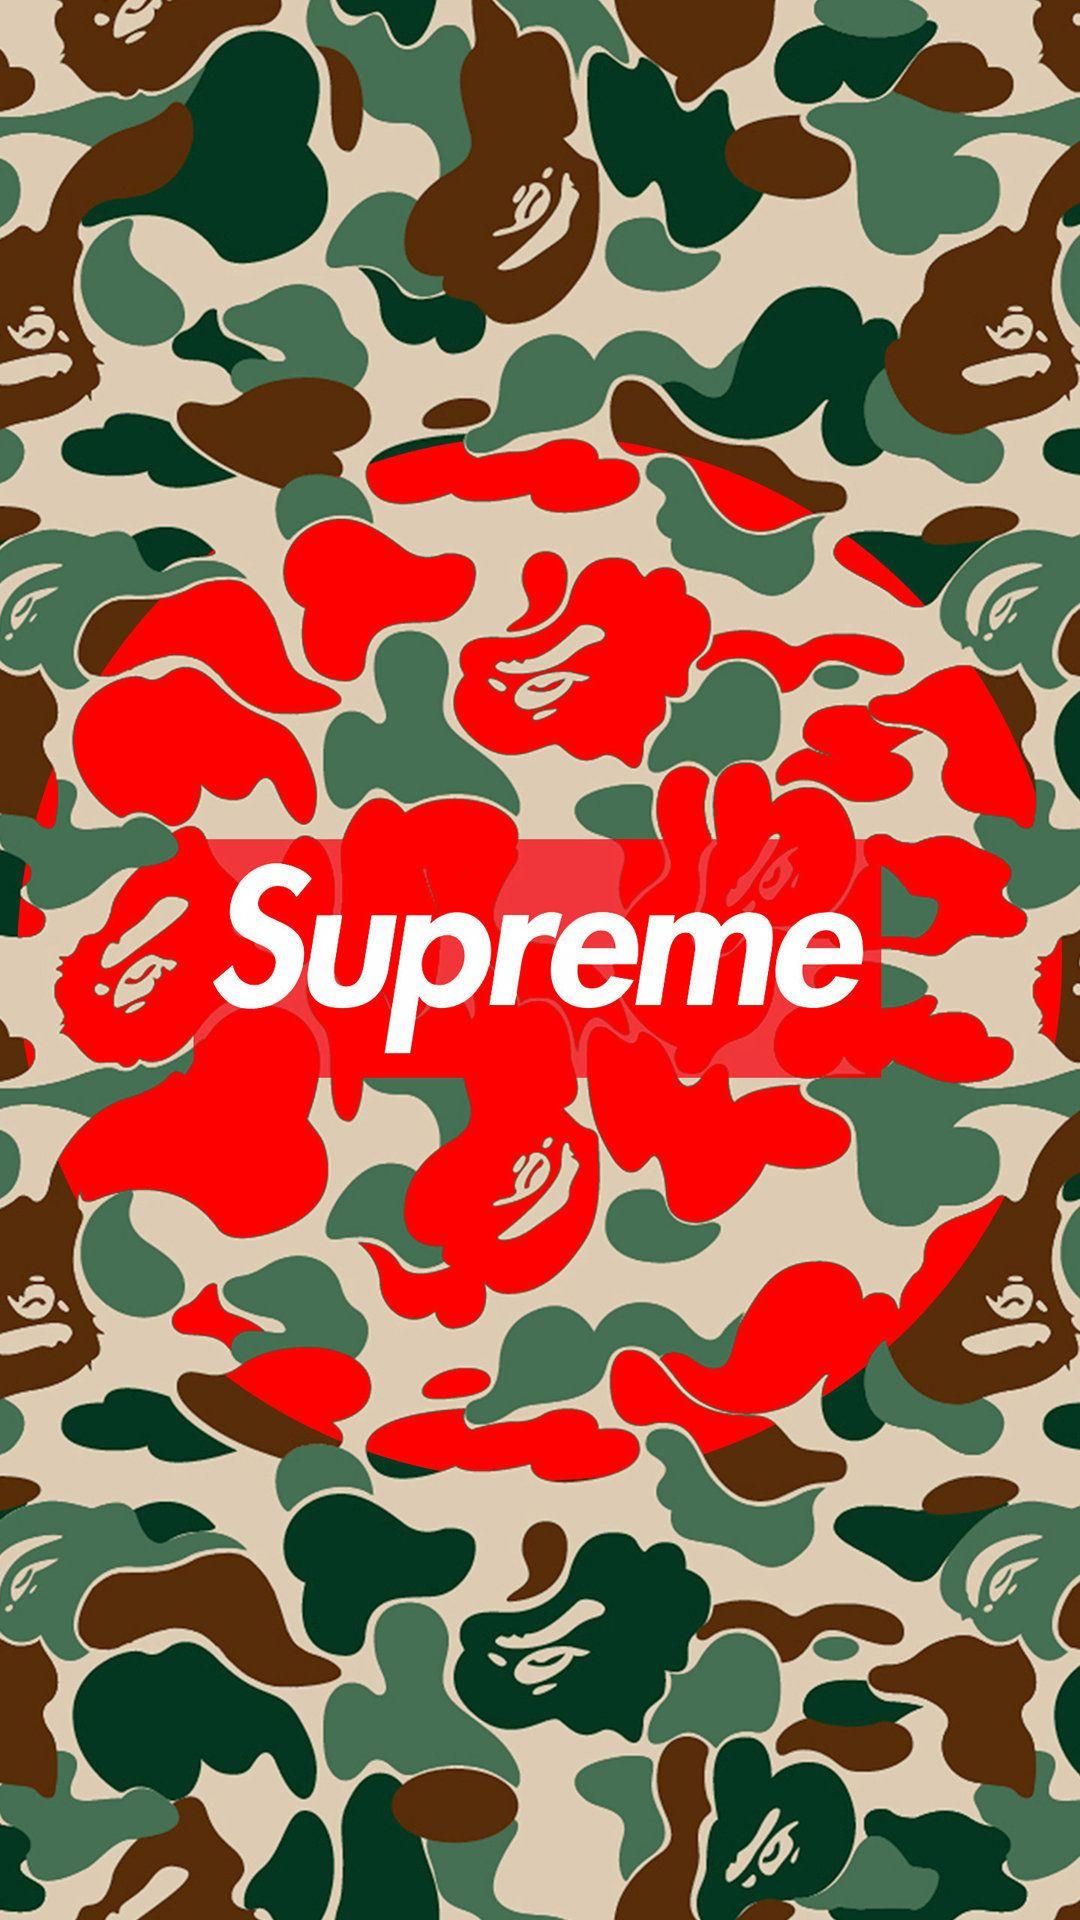 Supreme BAPE Camo Logo - Supreme Bape Jungle Camo Wallpaper - AuthenticSupreme.com